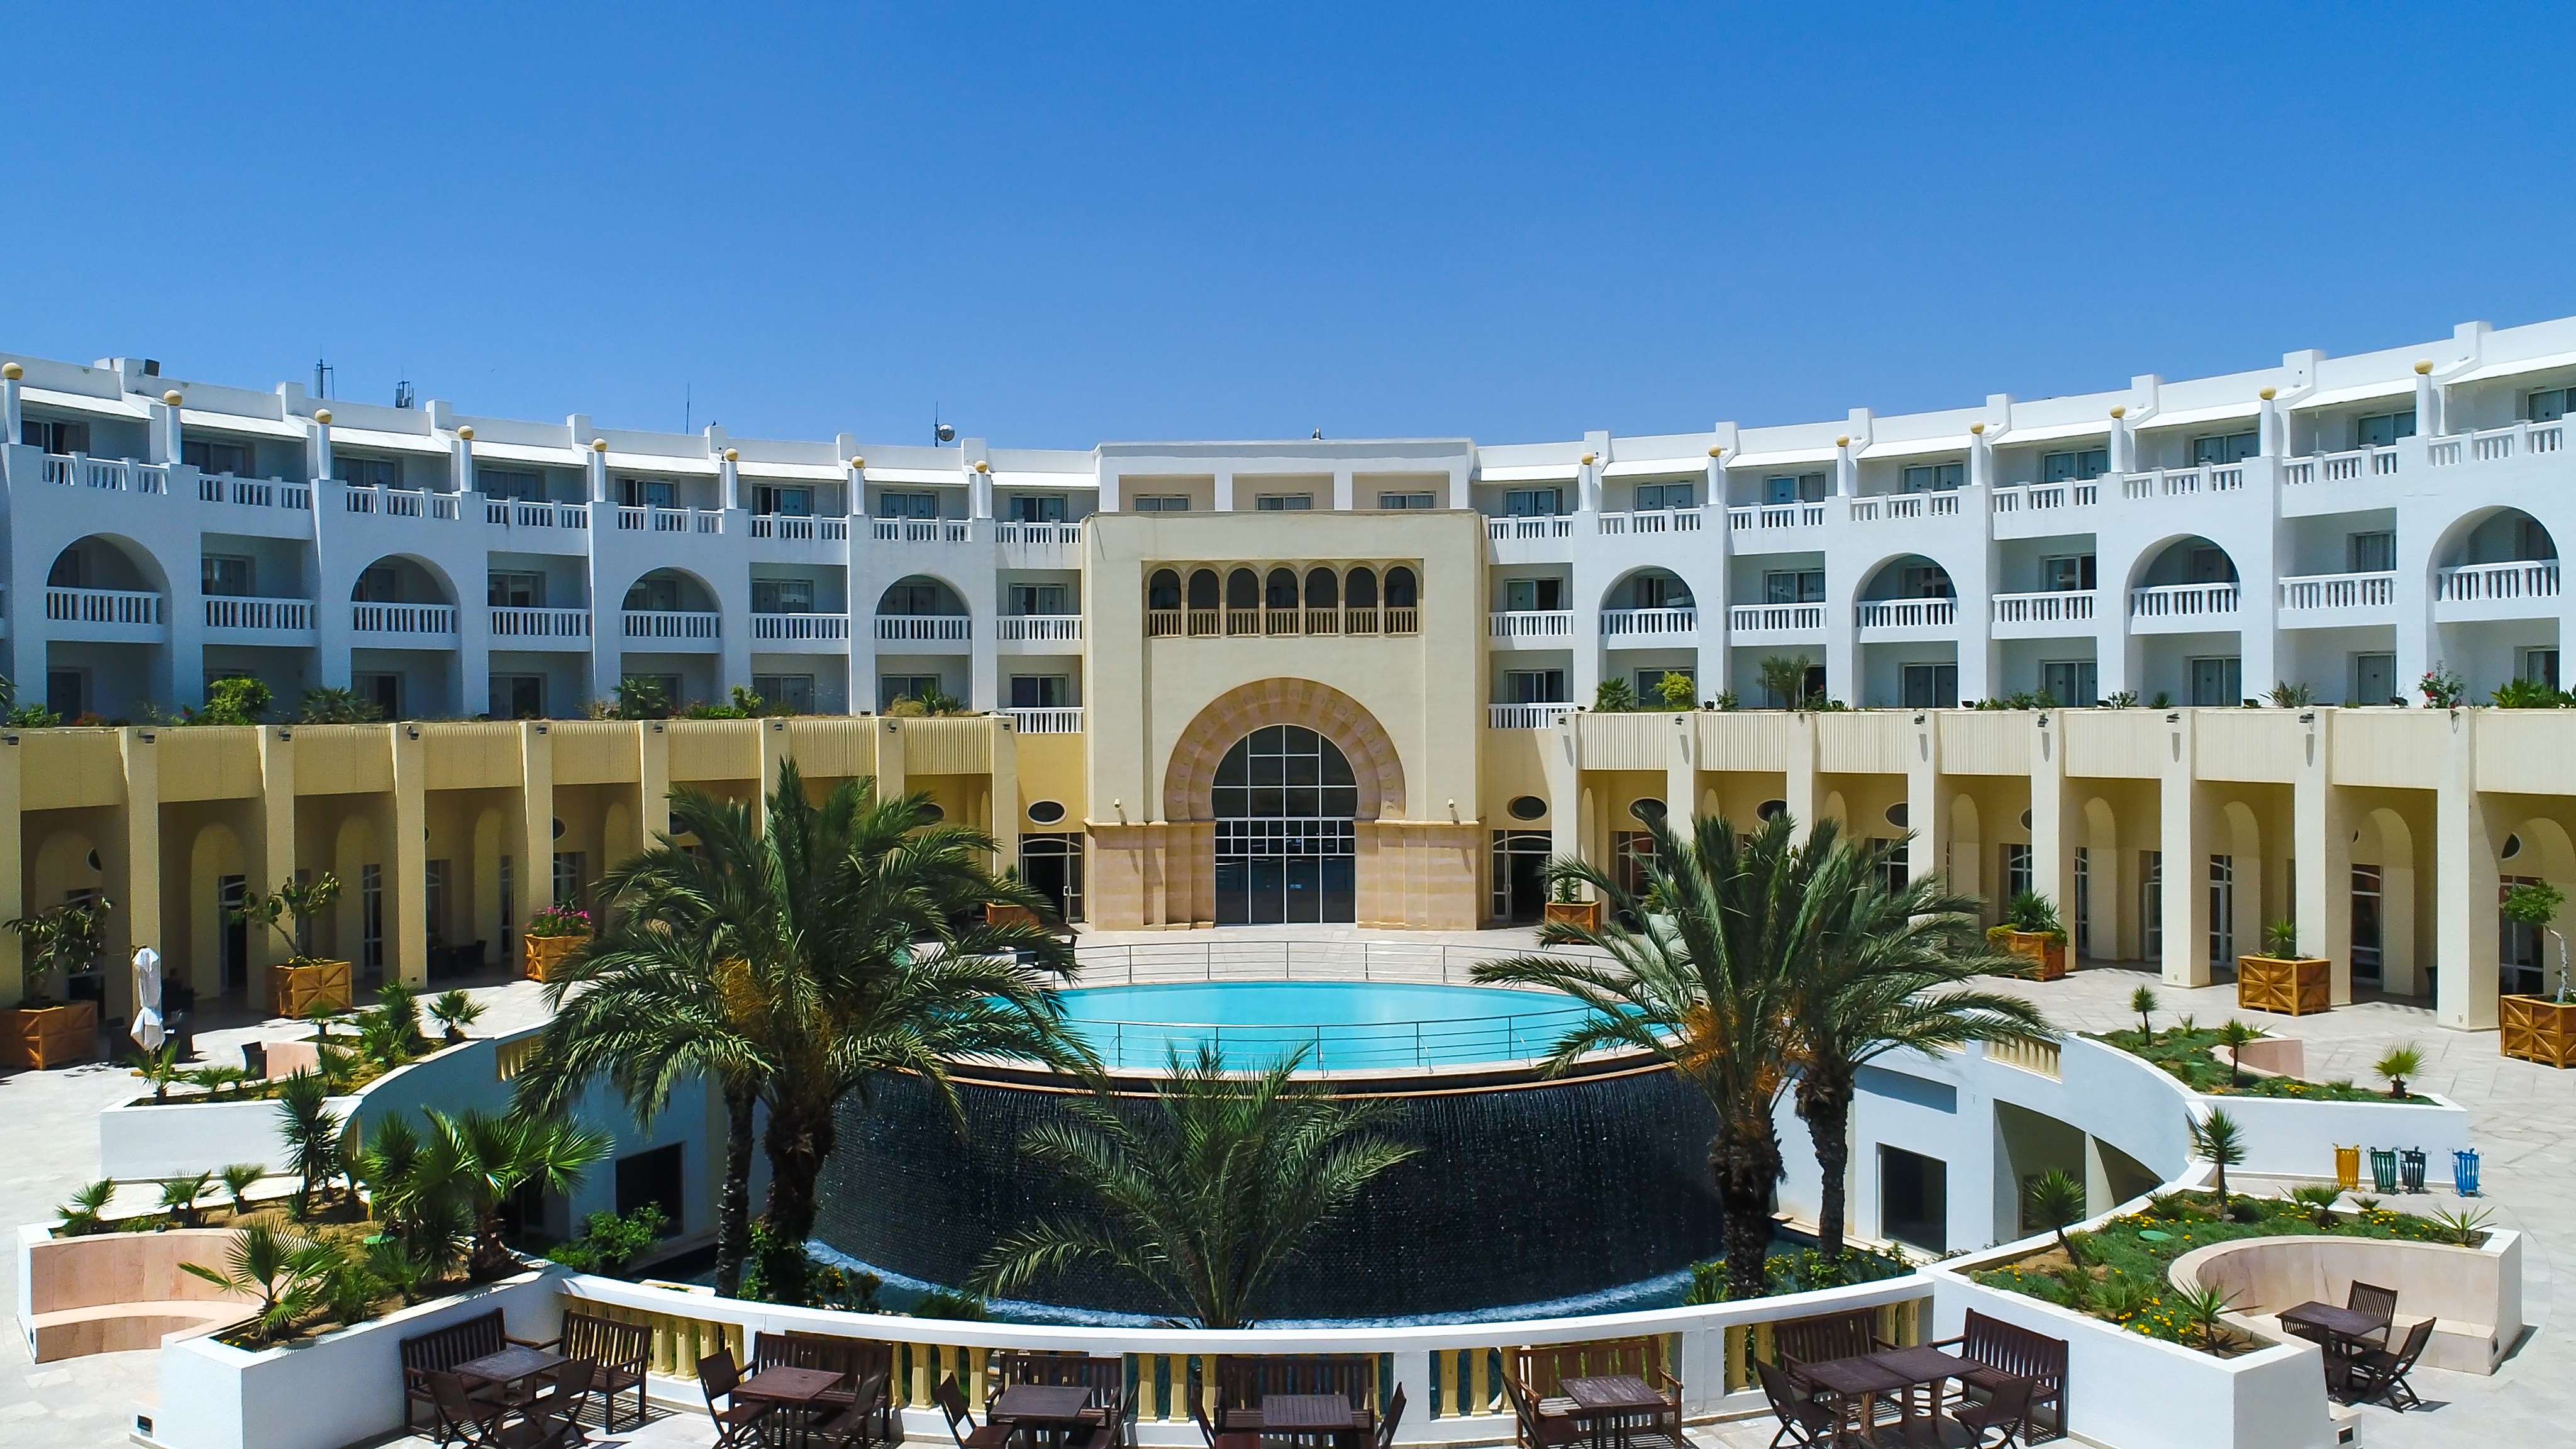 Ultra dernière minute Tunisie Hammamet Hôtel Medina Solaria et Thalasso 5*- cure thalasso incluse